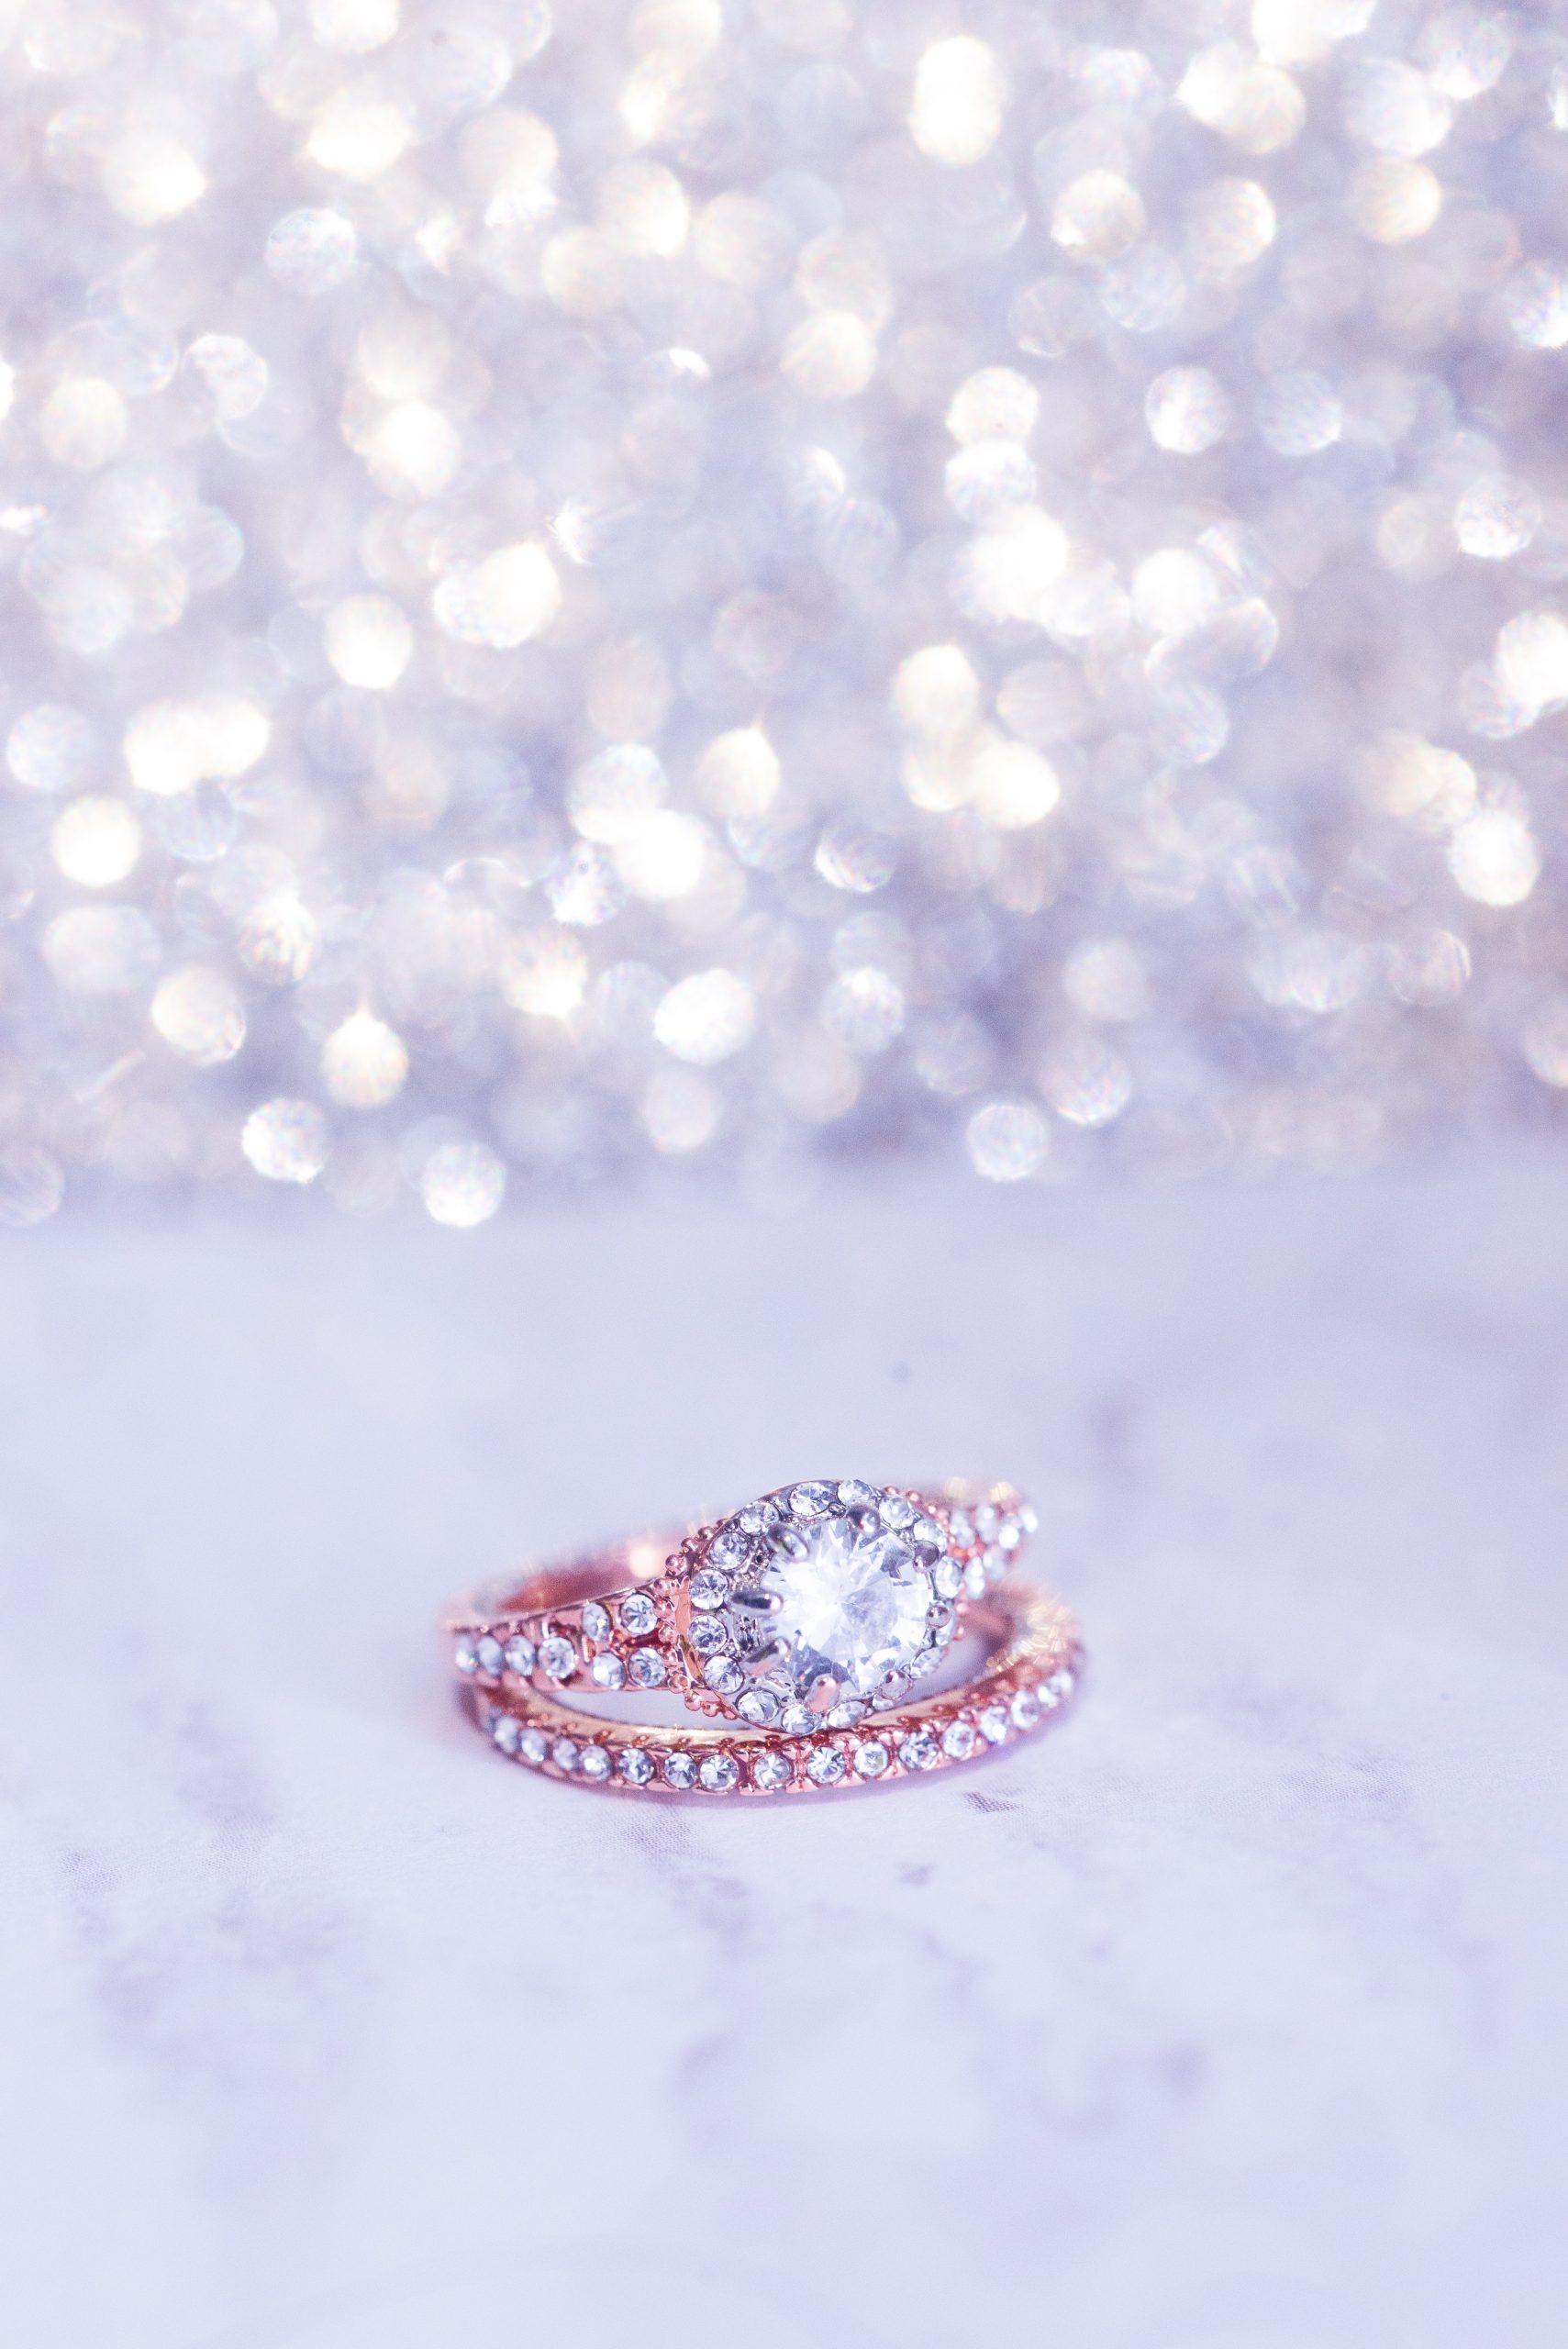 Tiffany & Company Engagement Rings - Levi Family Jewelers